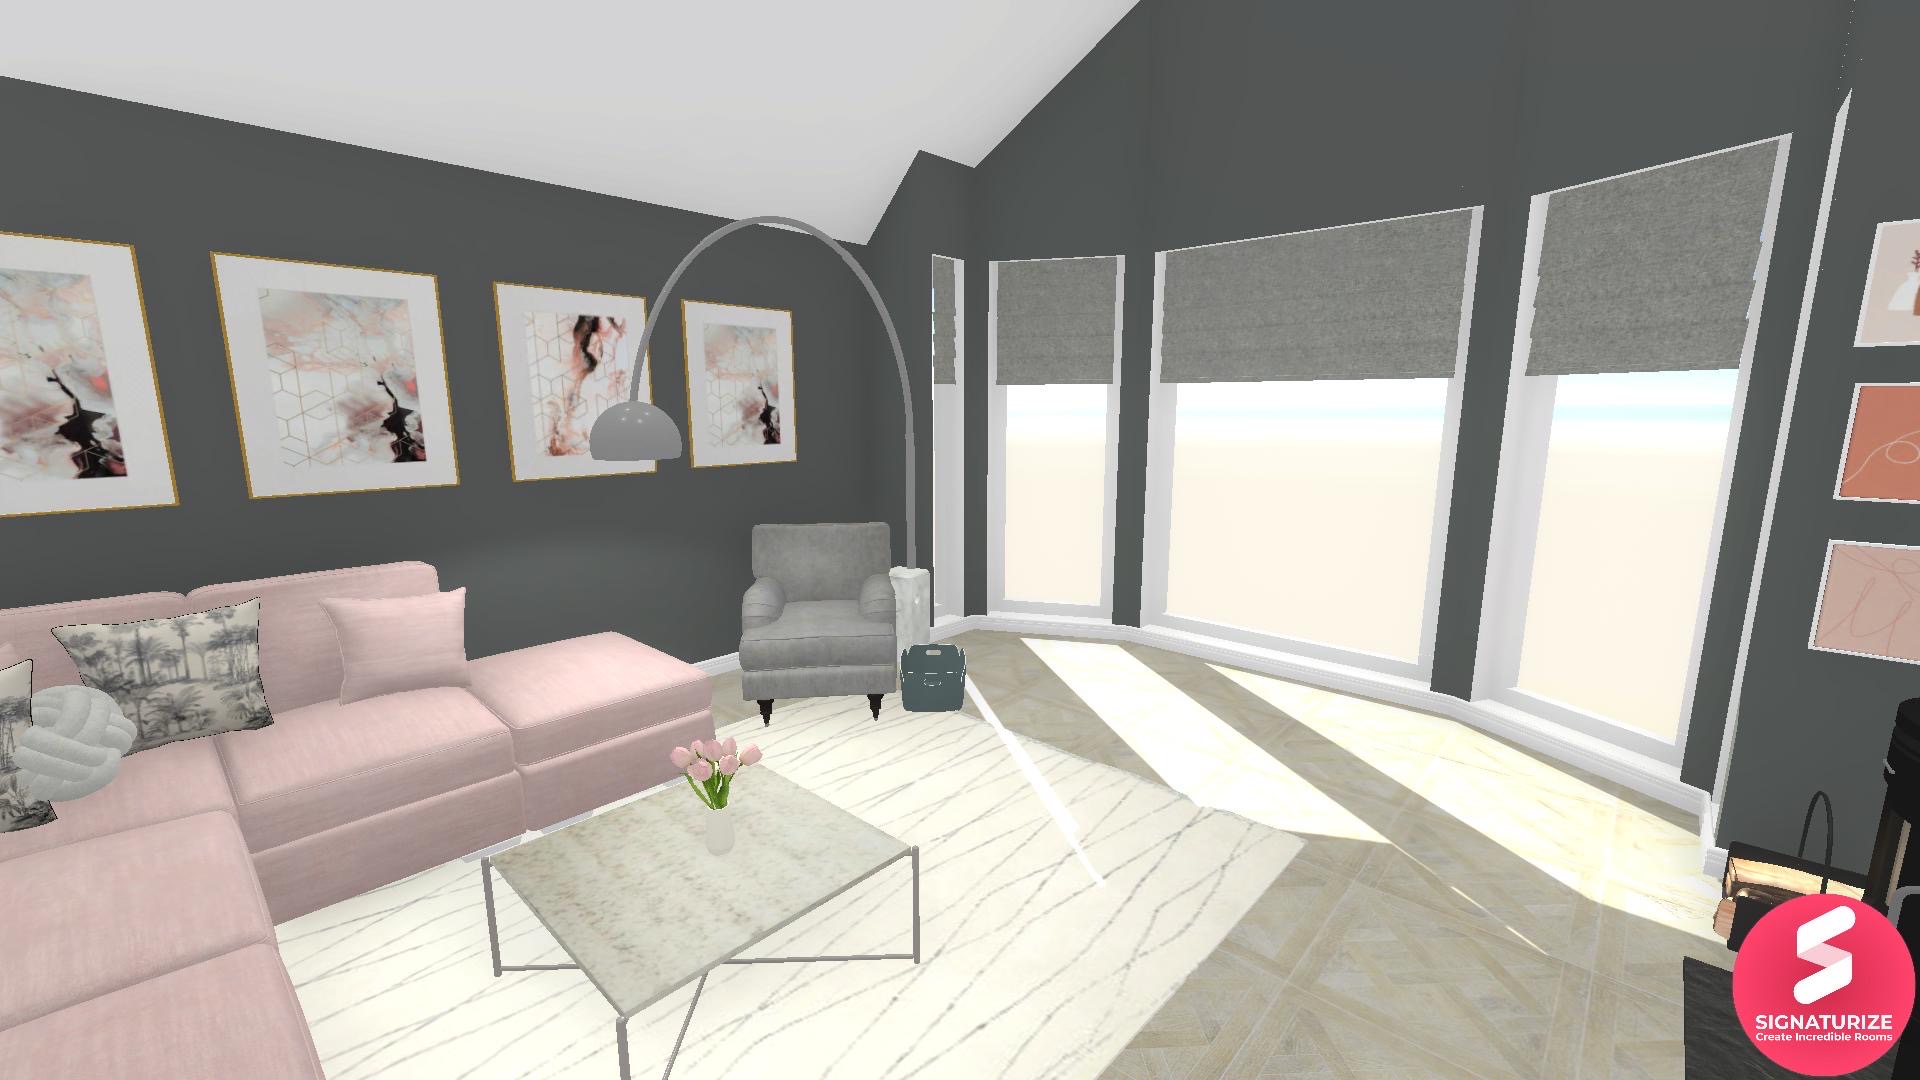 Dark Living room idea with pink corner sofa